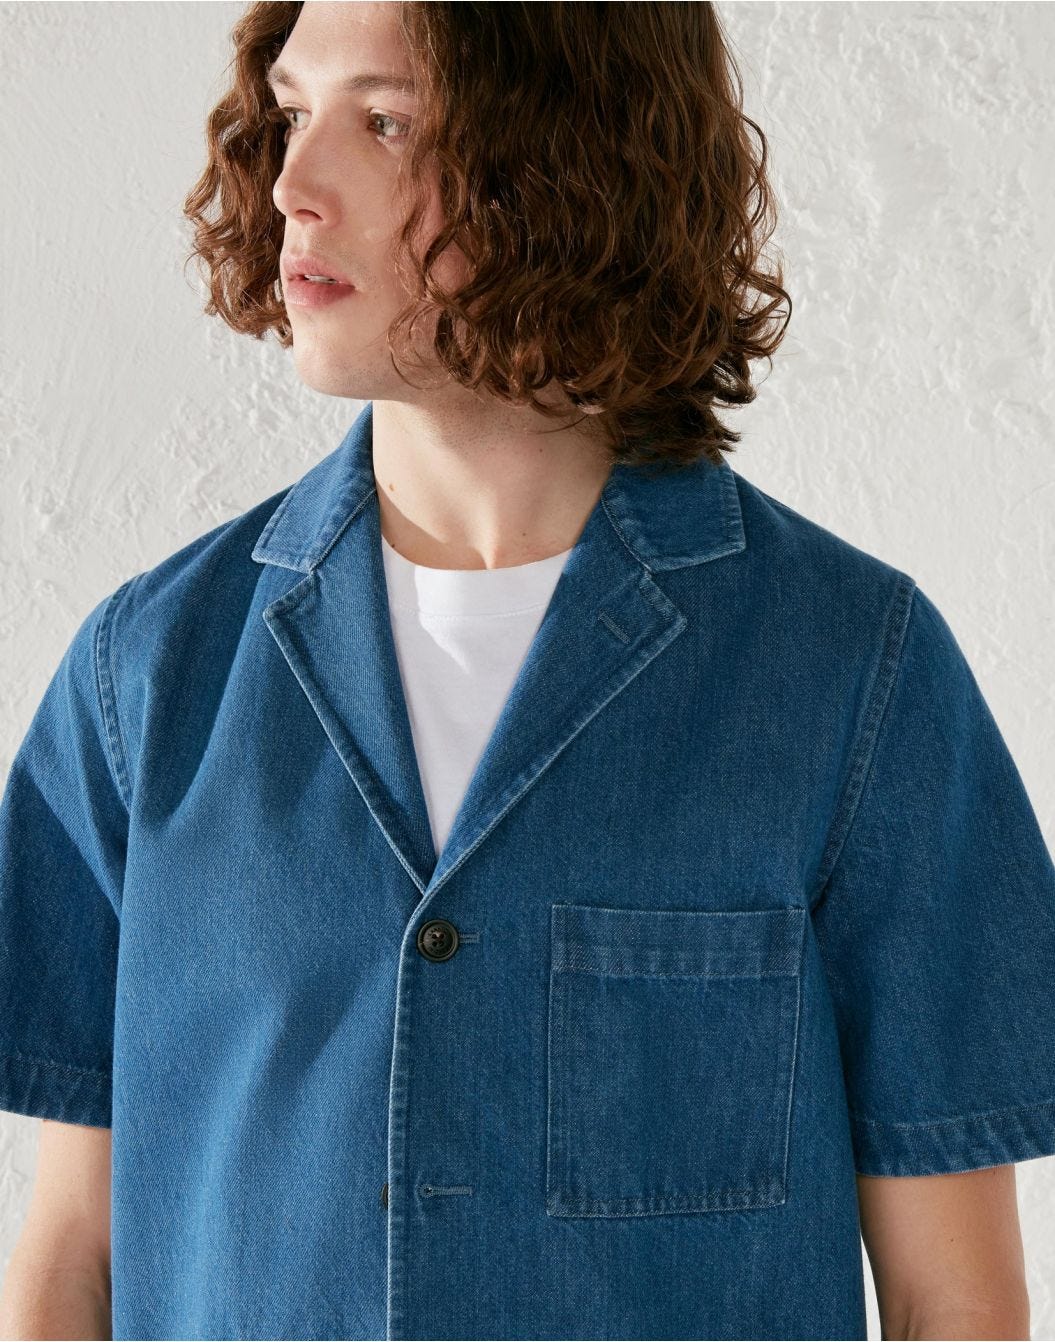 Blue Oxford fabric shirt jacket